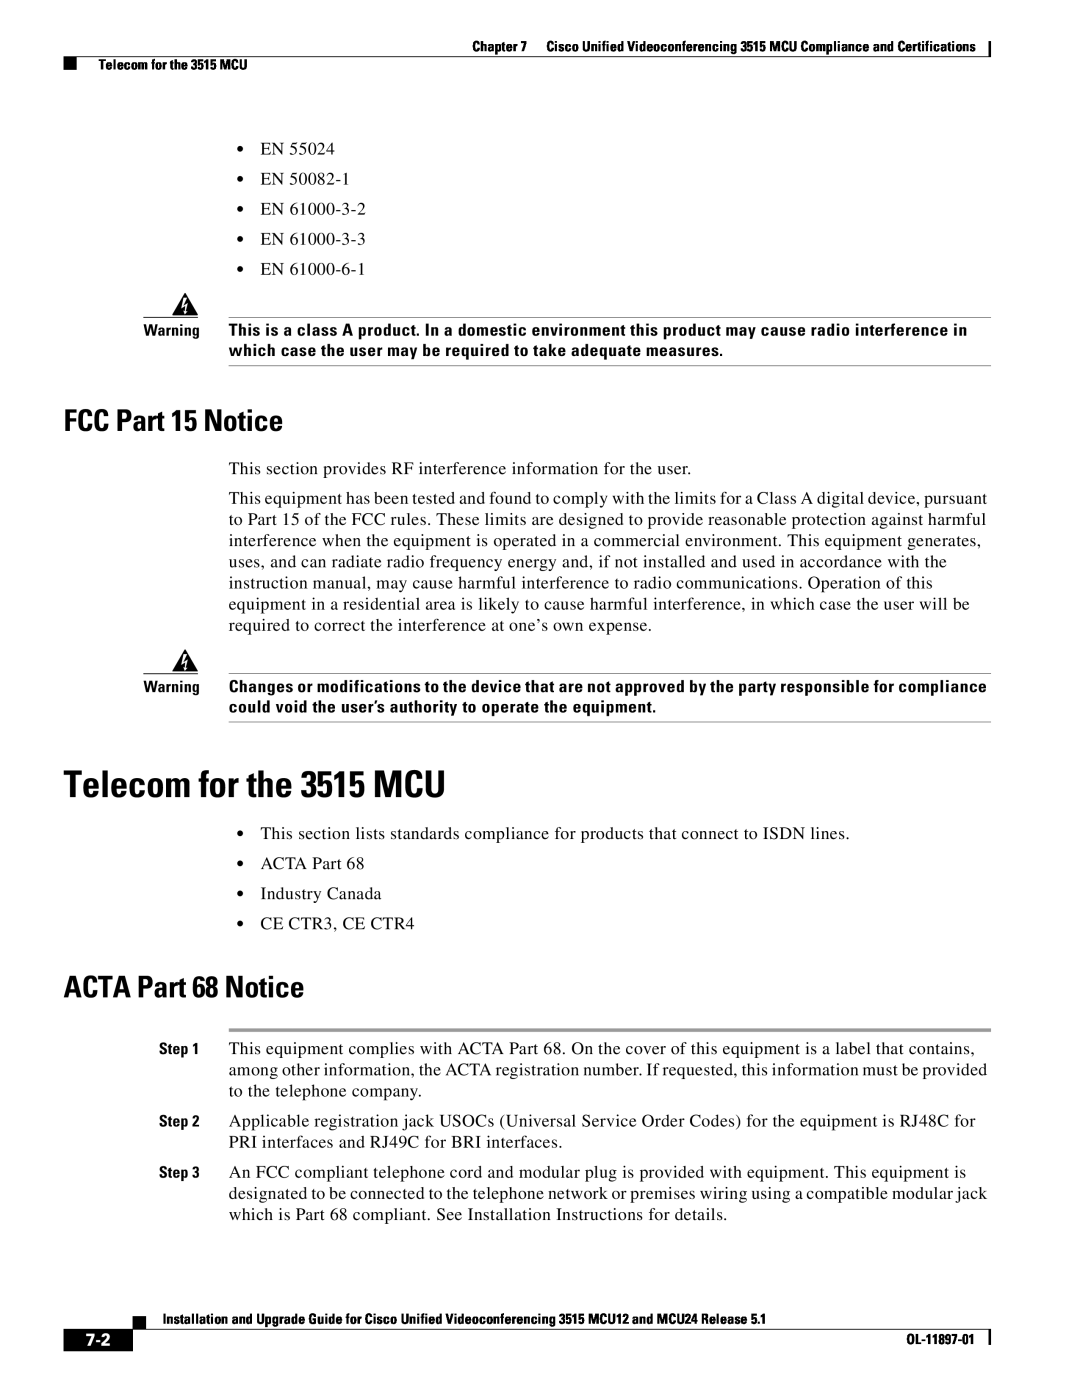 Cisco Systems MCU24 manual Telecom for the 3515 MCU, FCC Part 15 Notice, ACTA Part 68 Notice 